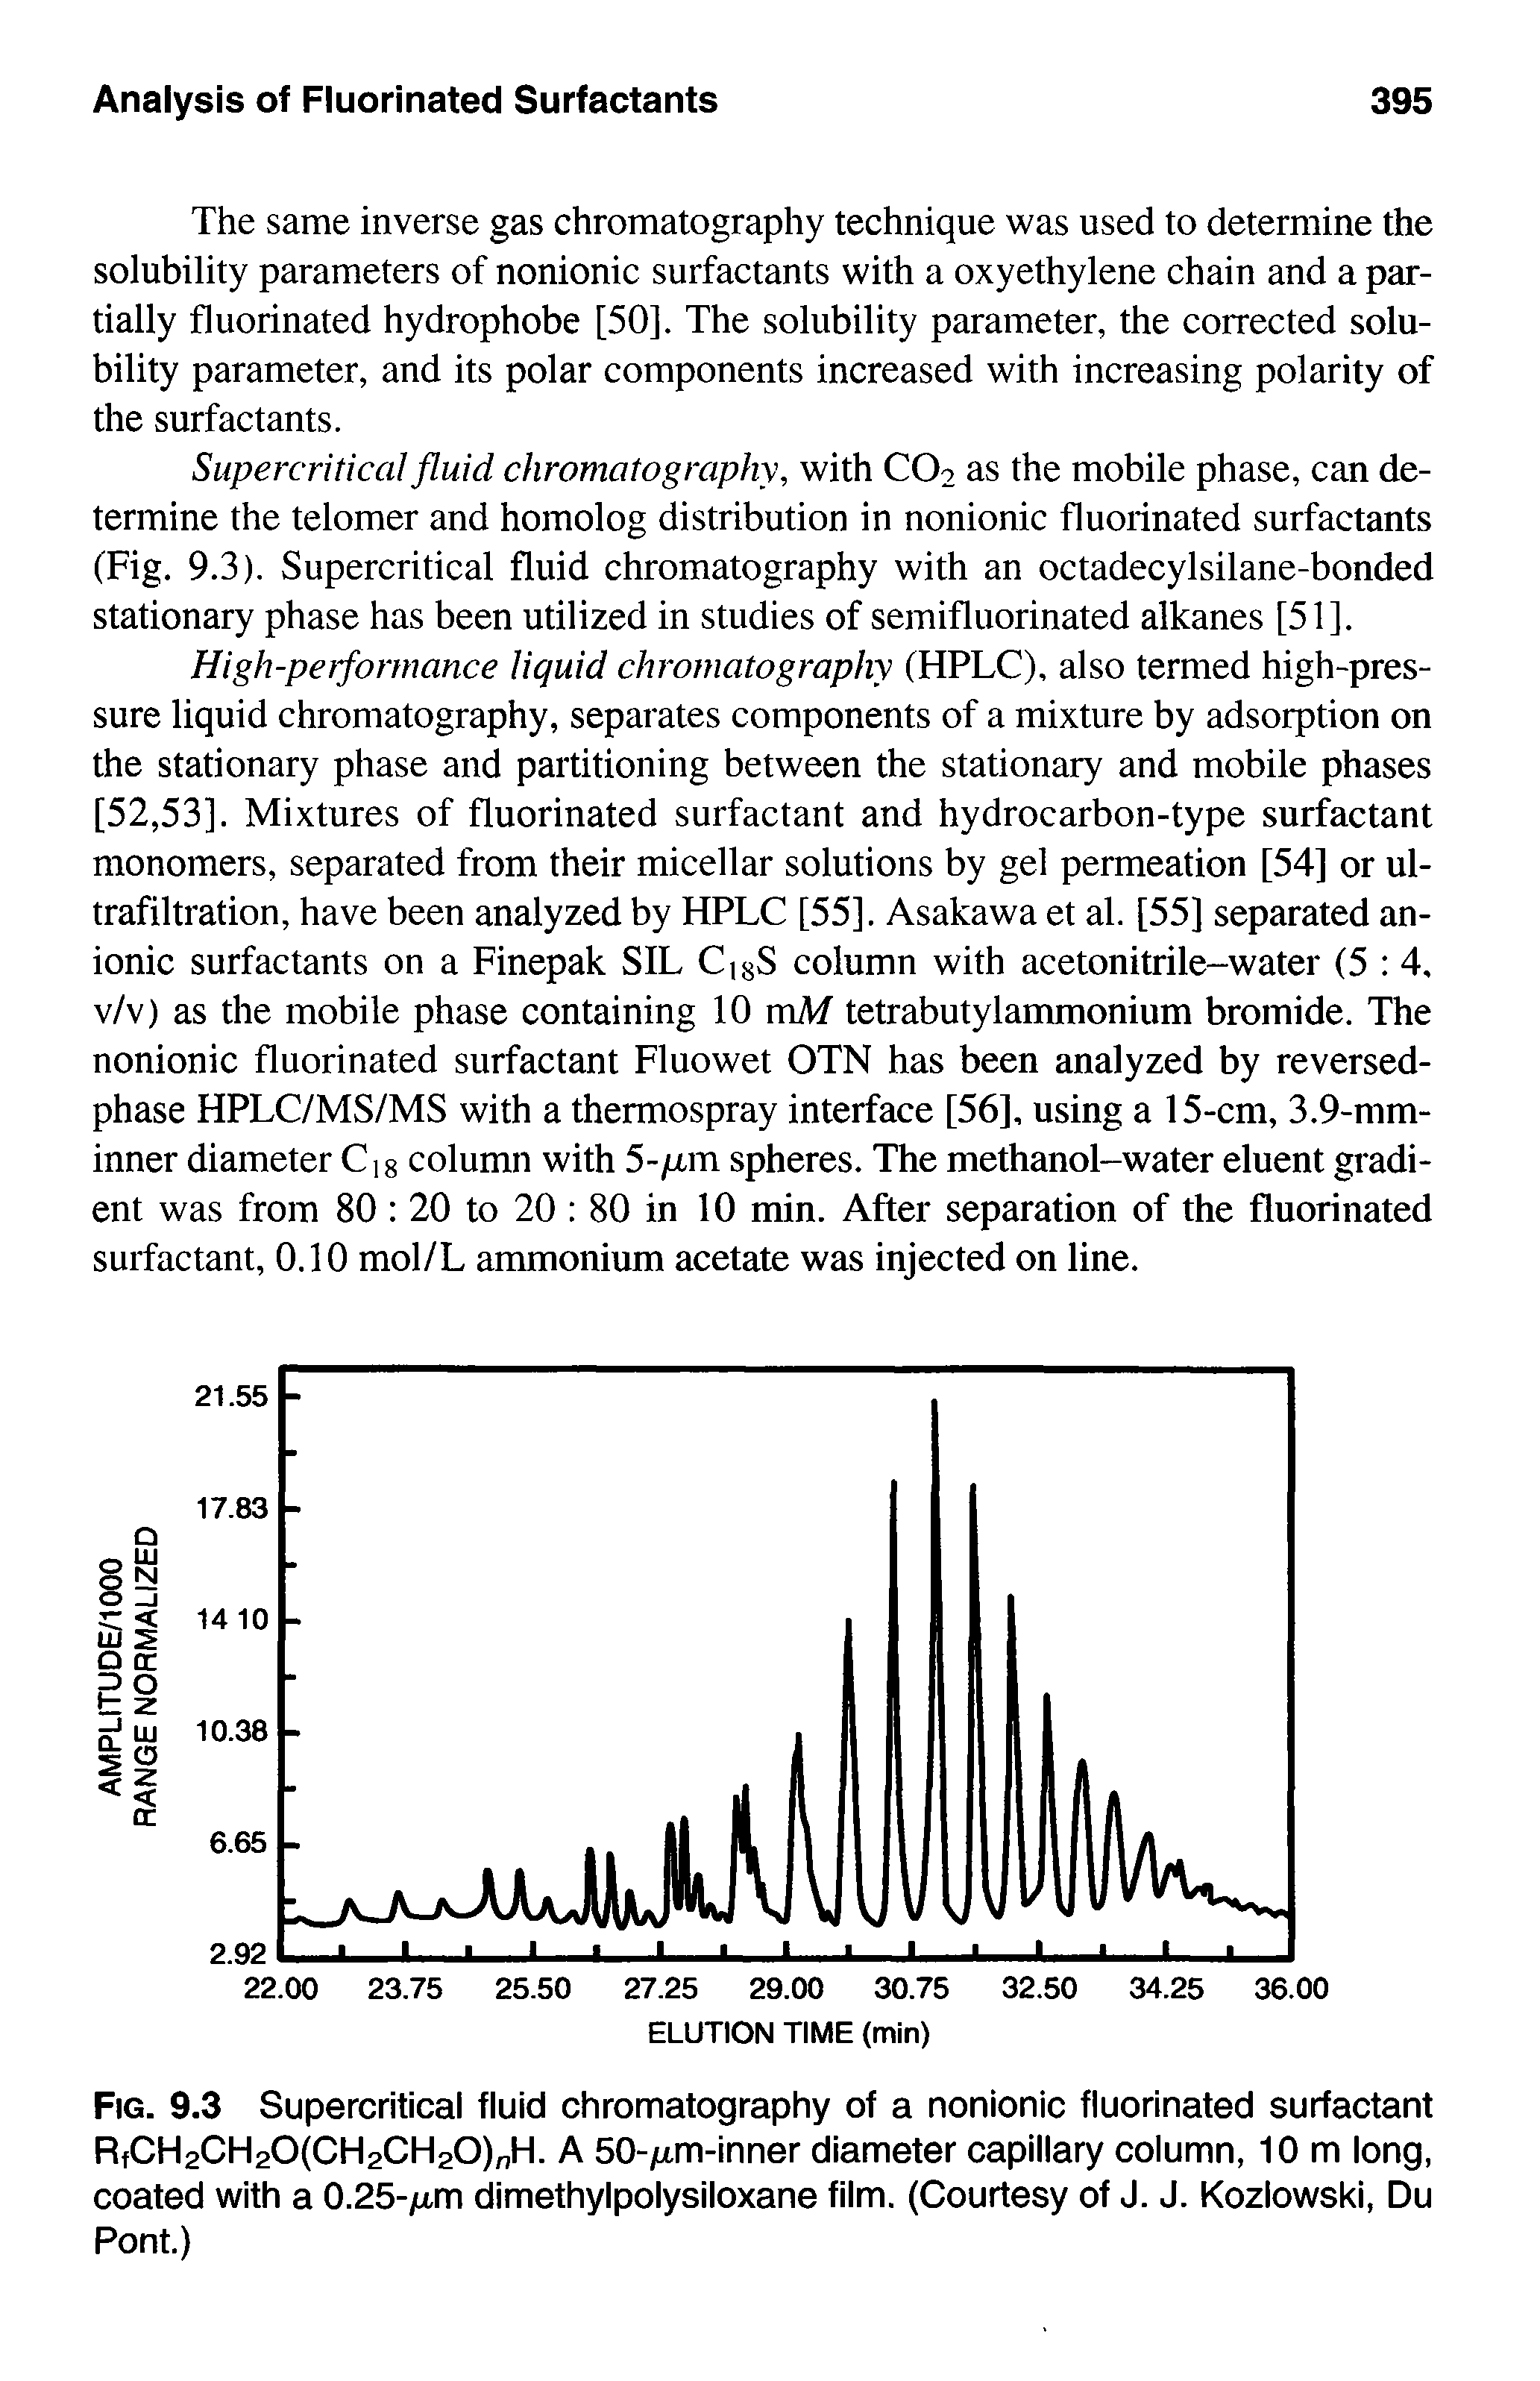 Fig. 9.3 Supercritical fluid chromatography of a nonionic fluorinated surfactant RfCH2CH20(CH2CH20) H. A 50-/xm-inner diameter capillary column, 10 m long, coated with a 0.25- im dimethylpolysiloxane film. (Courtesy of J. J. Kozlowski, Du Pont.)...